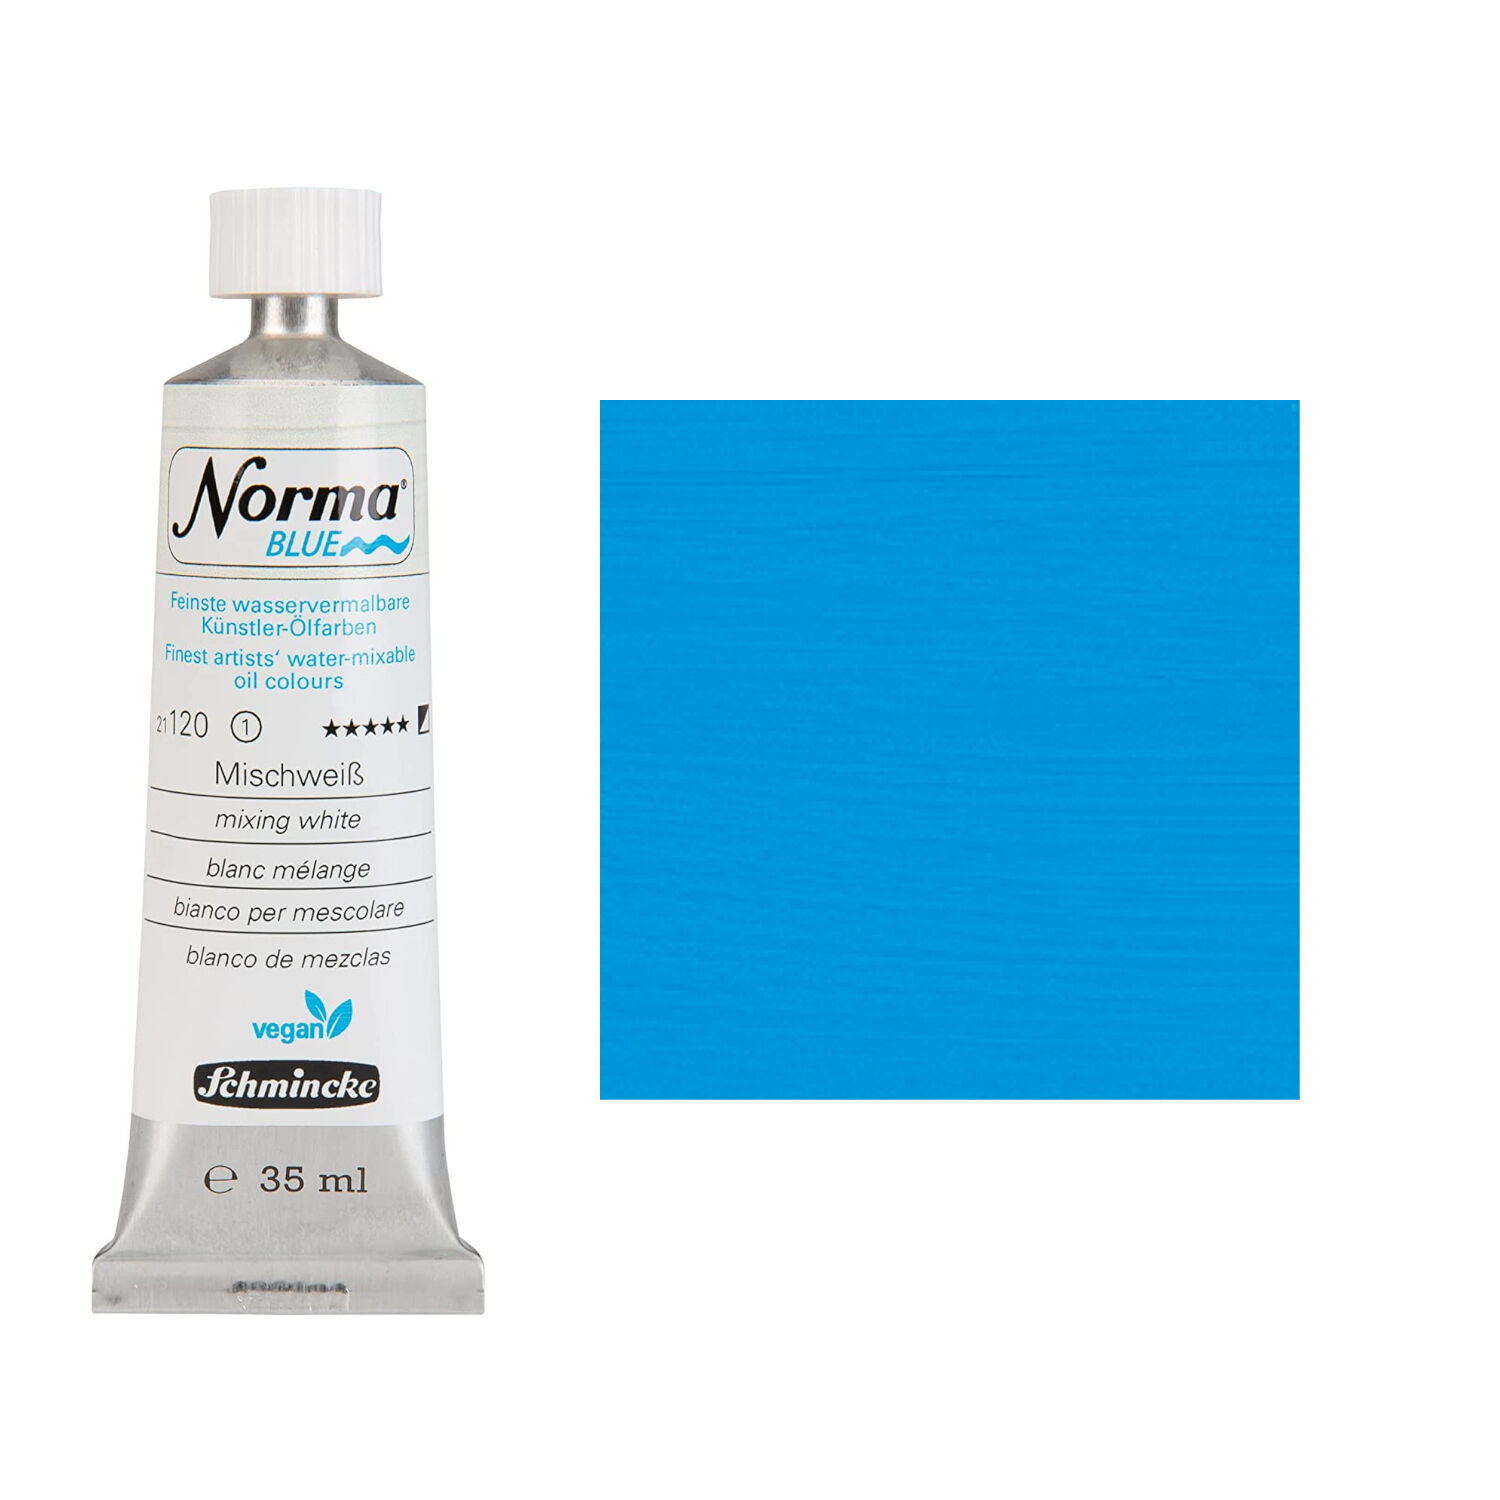 NEU Schmincke Norma BLUE, wasservermalbare lfarbe, 35 ml, Azurblau